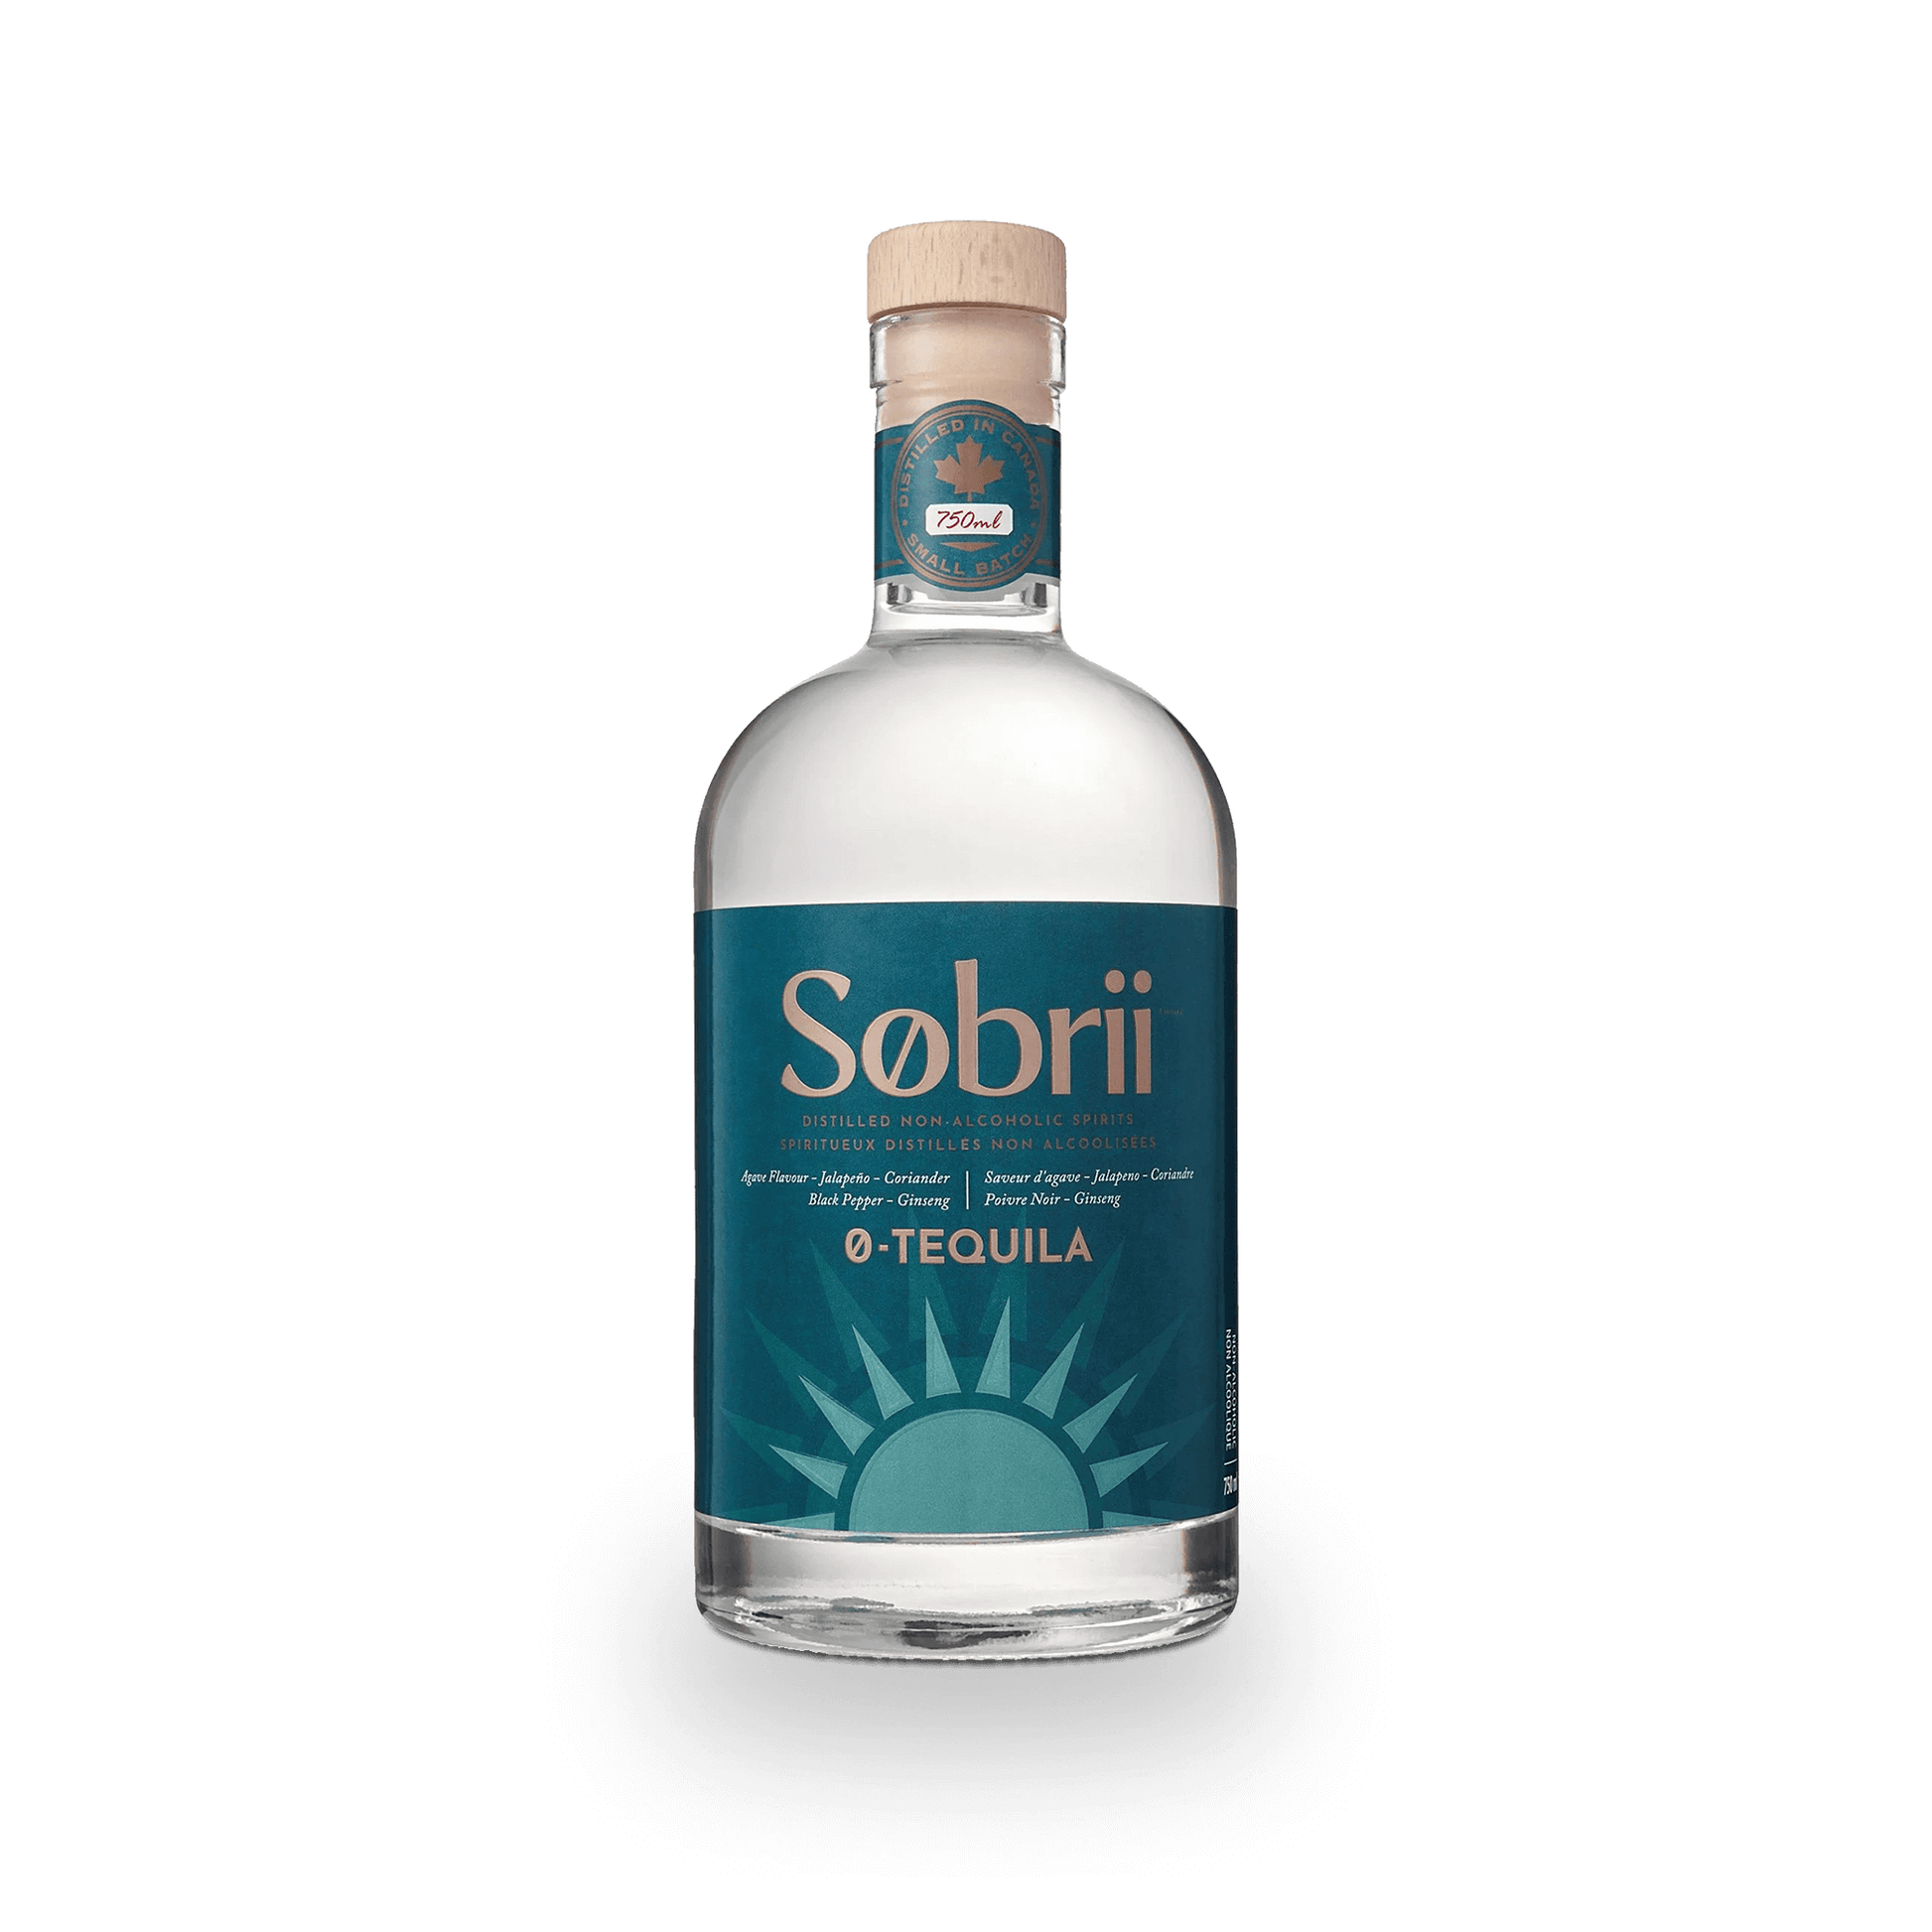 Sobrii 0-Tequila Bottle